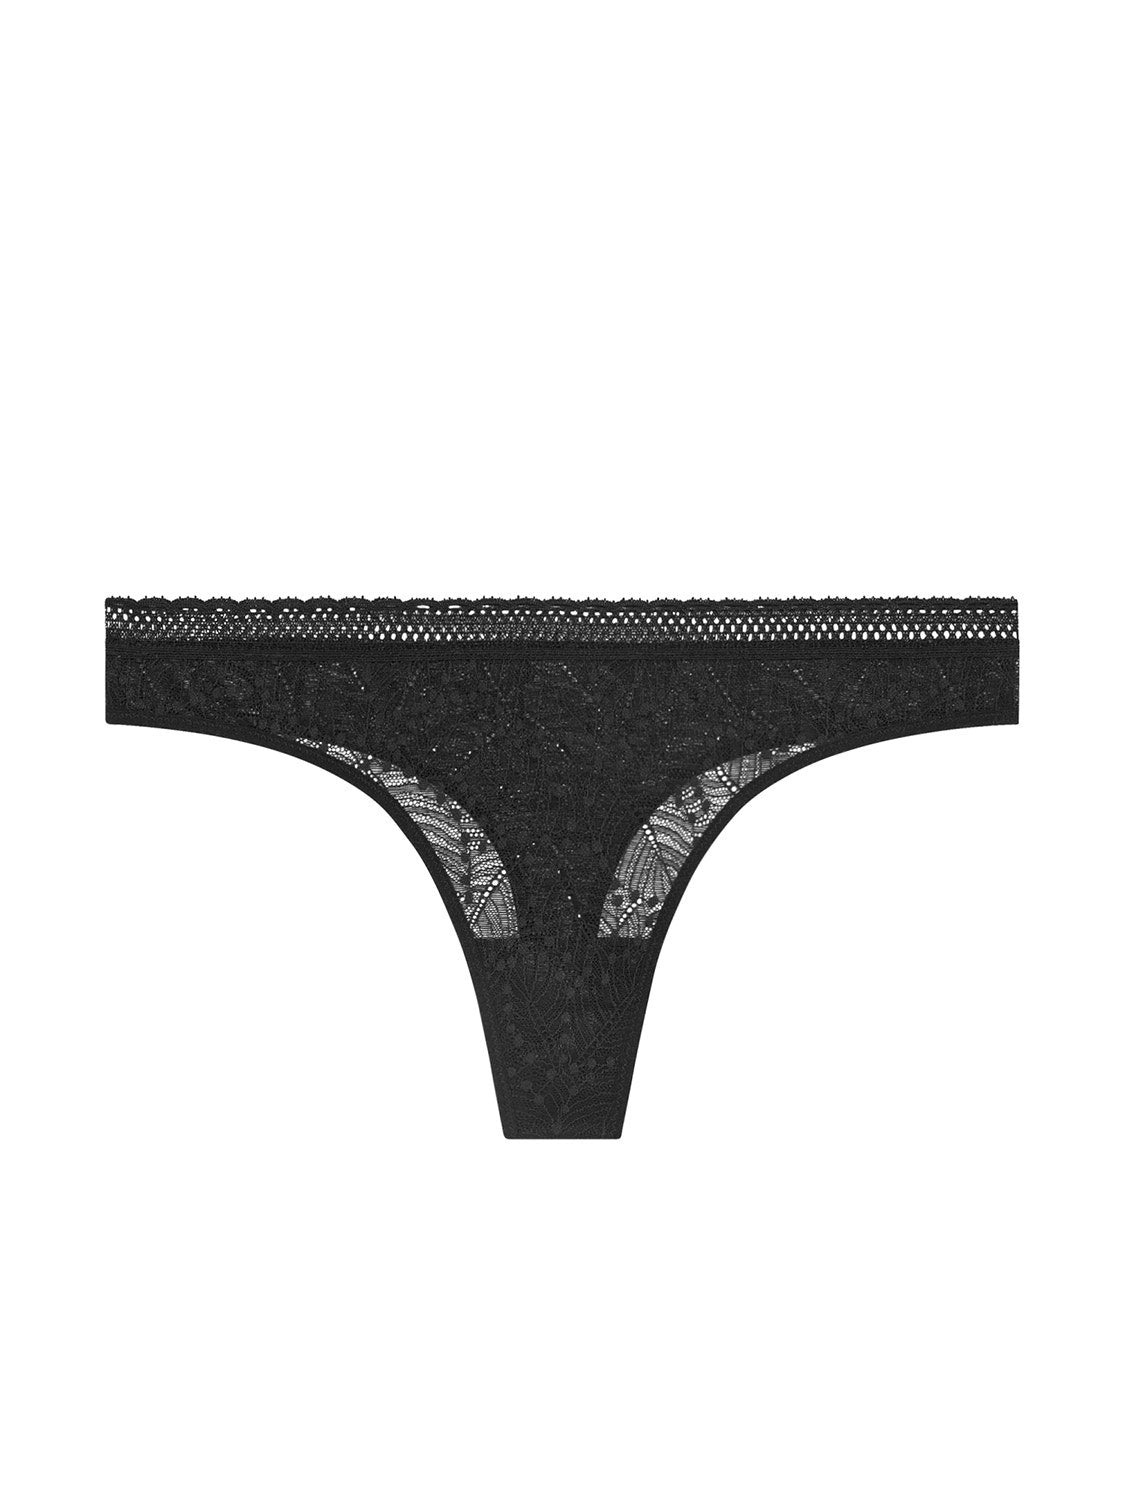 Bretelle Grunge Lace Panty in Black FINAL SALE (50% Off) - Busted Bra Shop